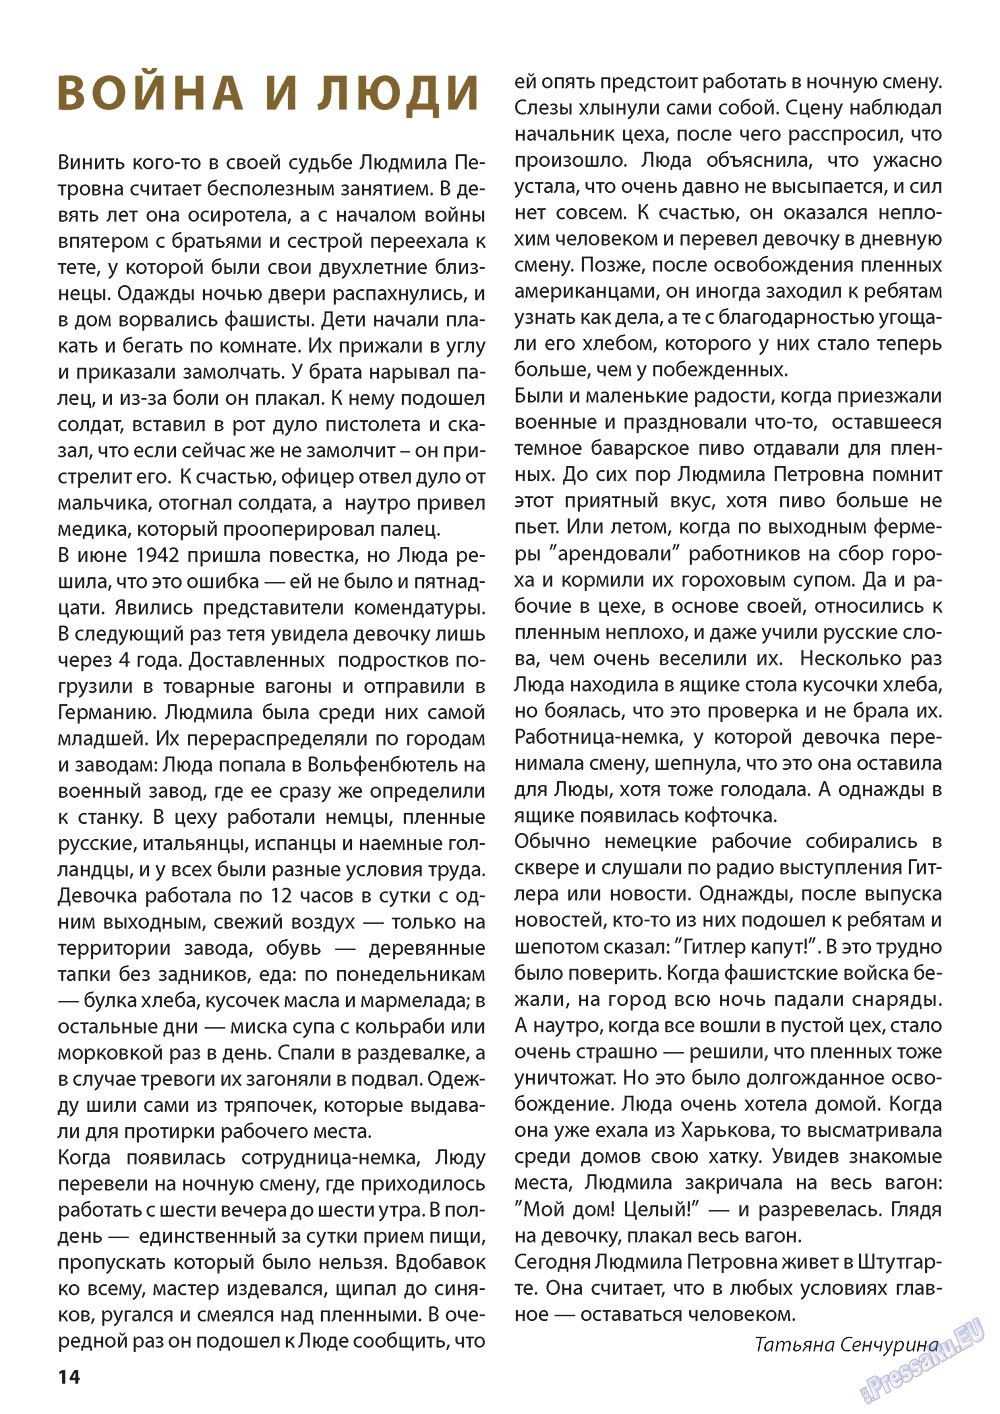 Wadim, журнал. 2012 №5 стр.14